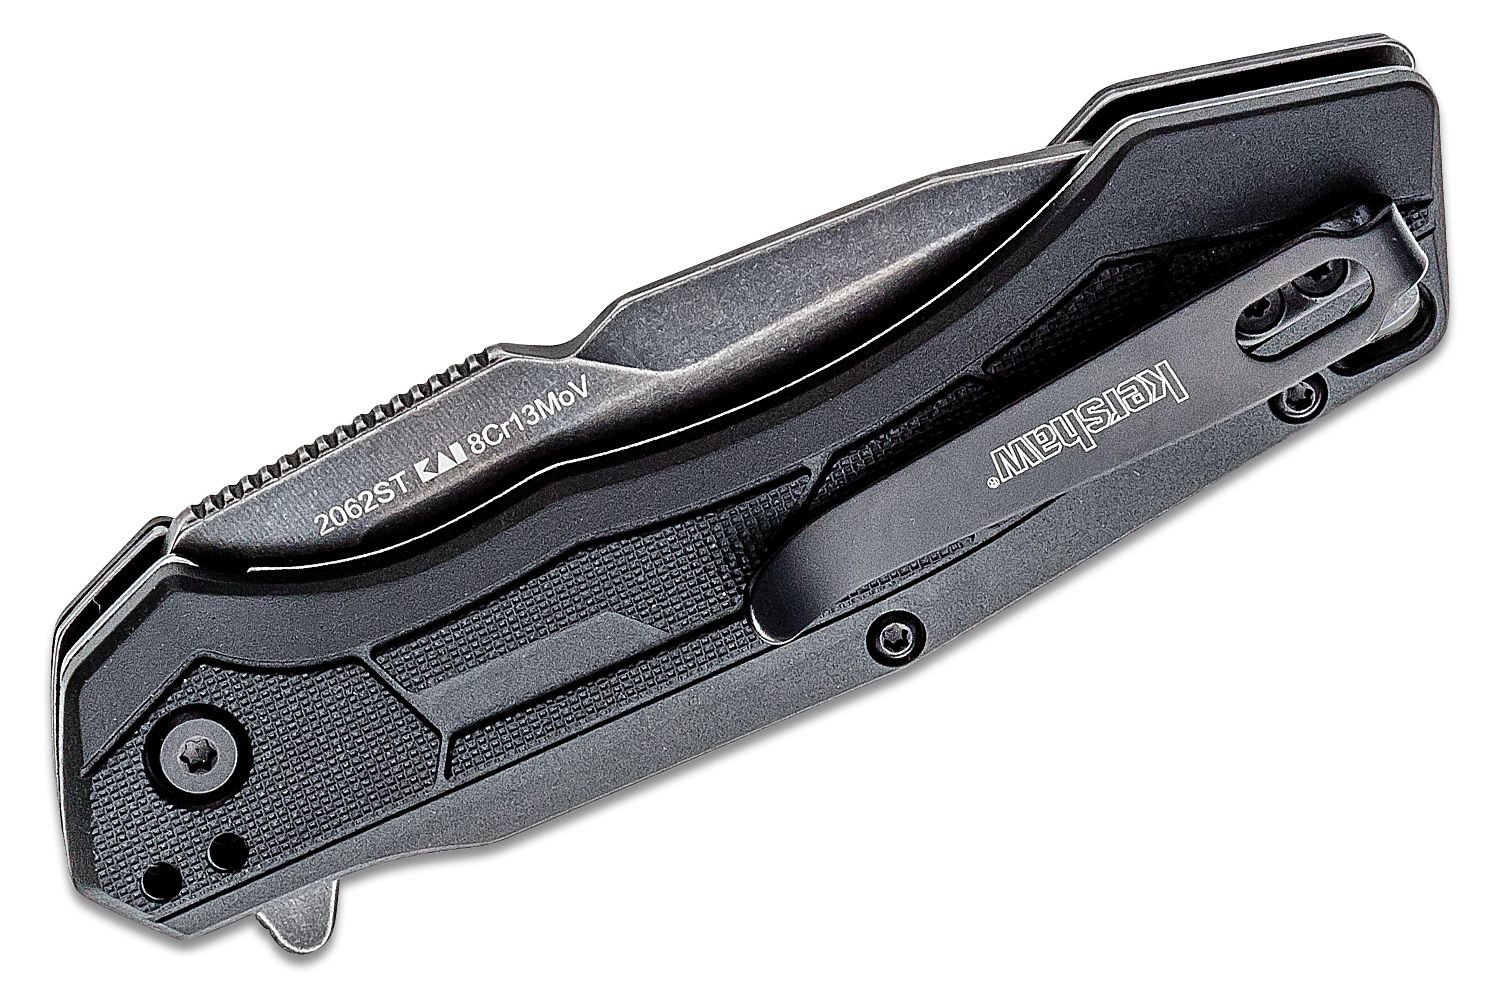 Kershaw Pocket Knife Assisted Opening Blade with Bonus Tool KBO Set